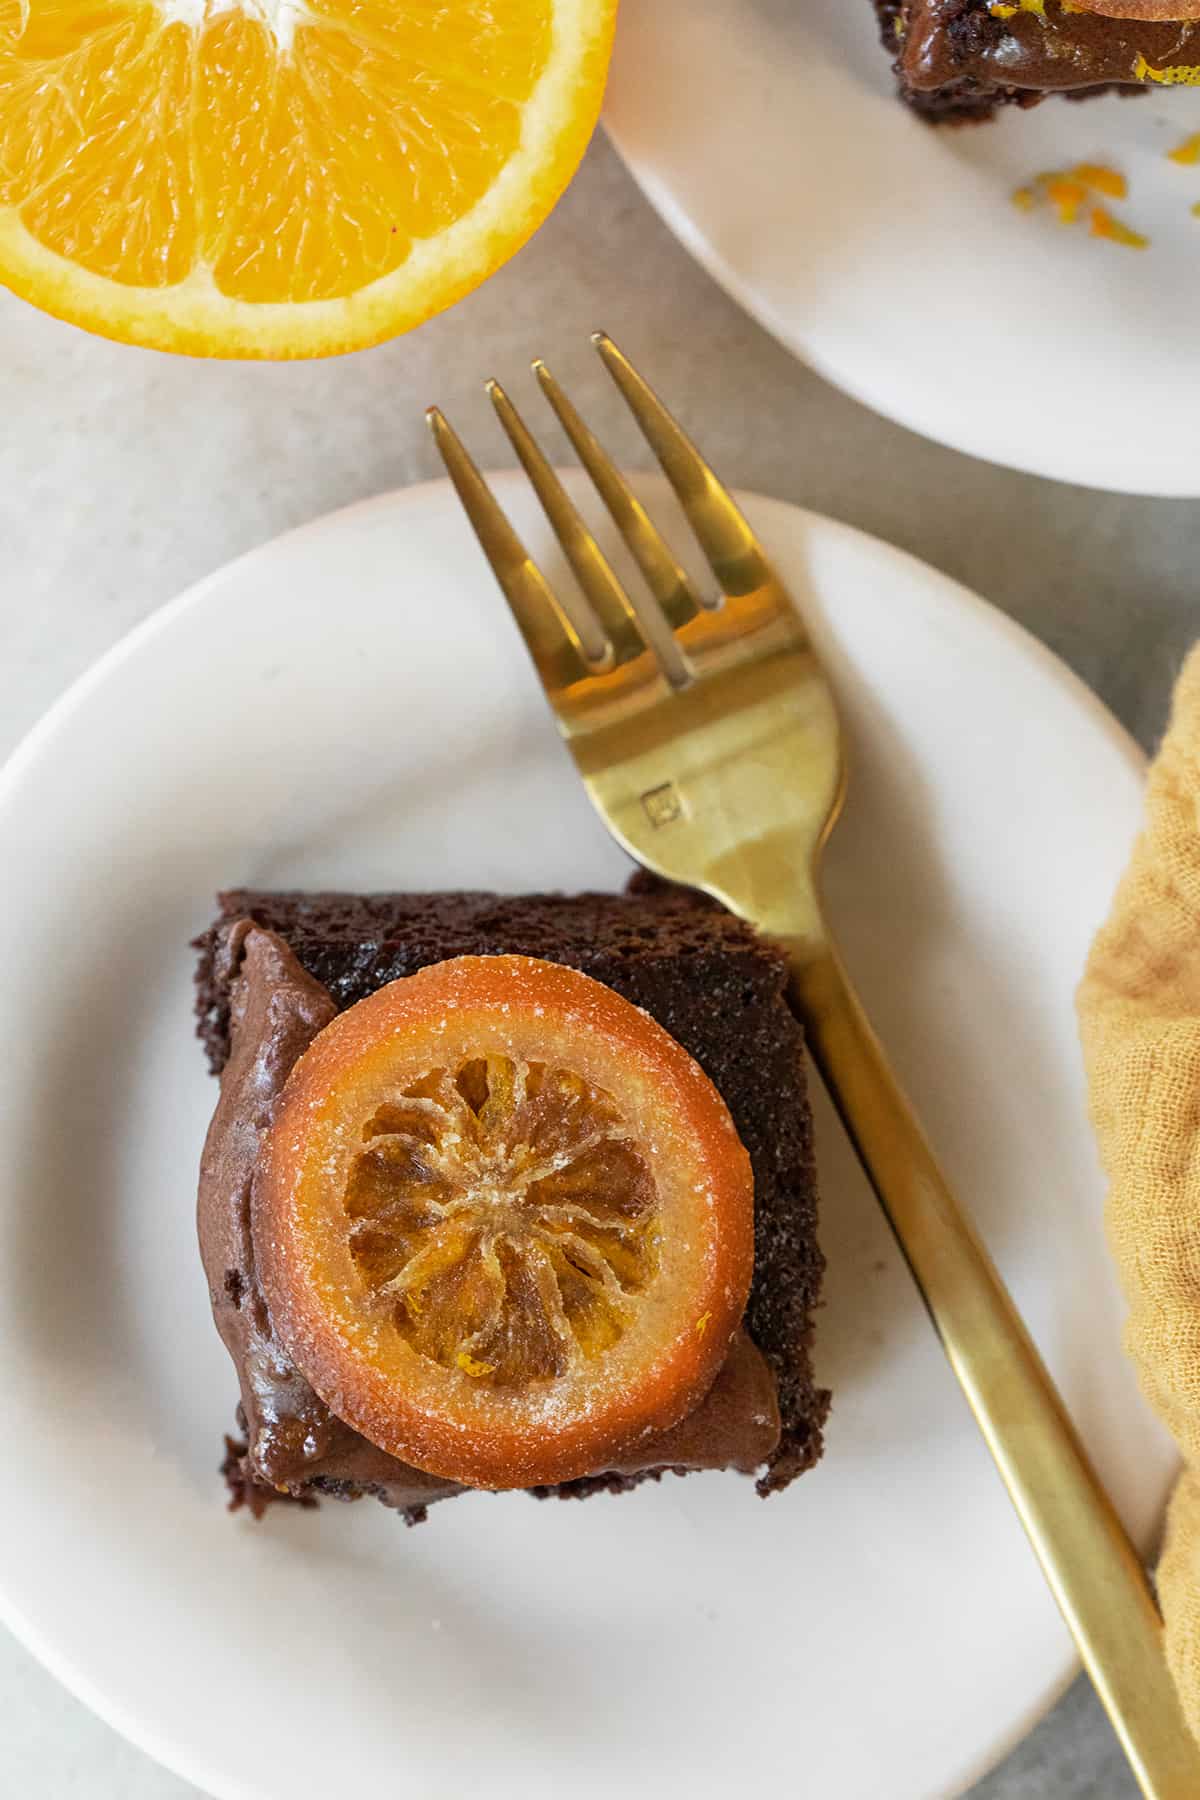 Slice of chocolate cake with orange.